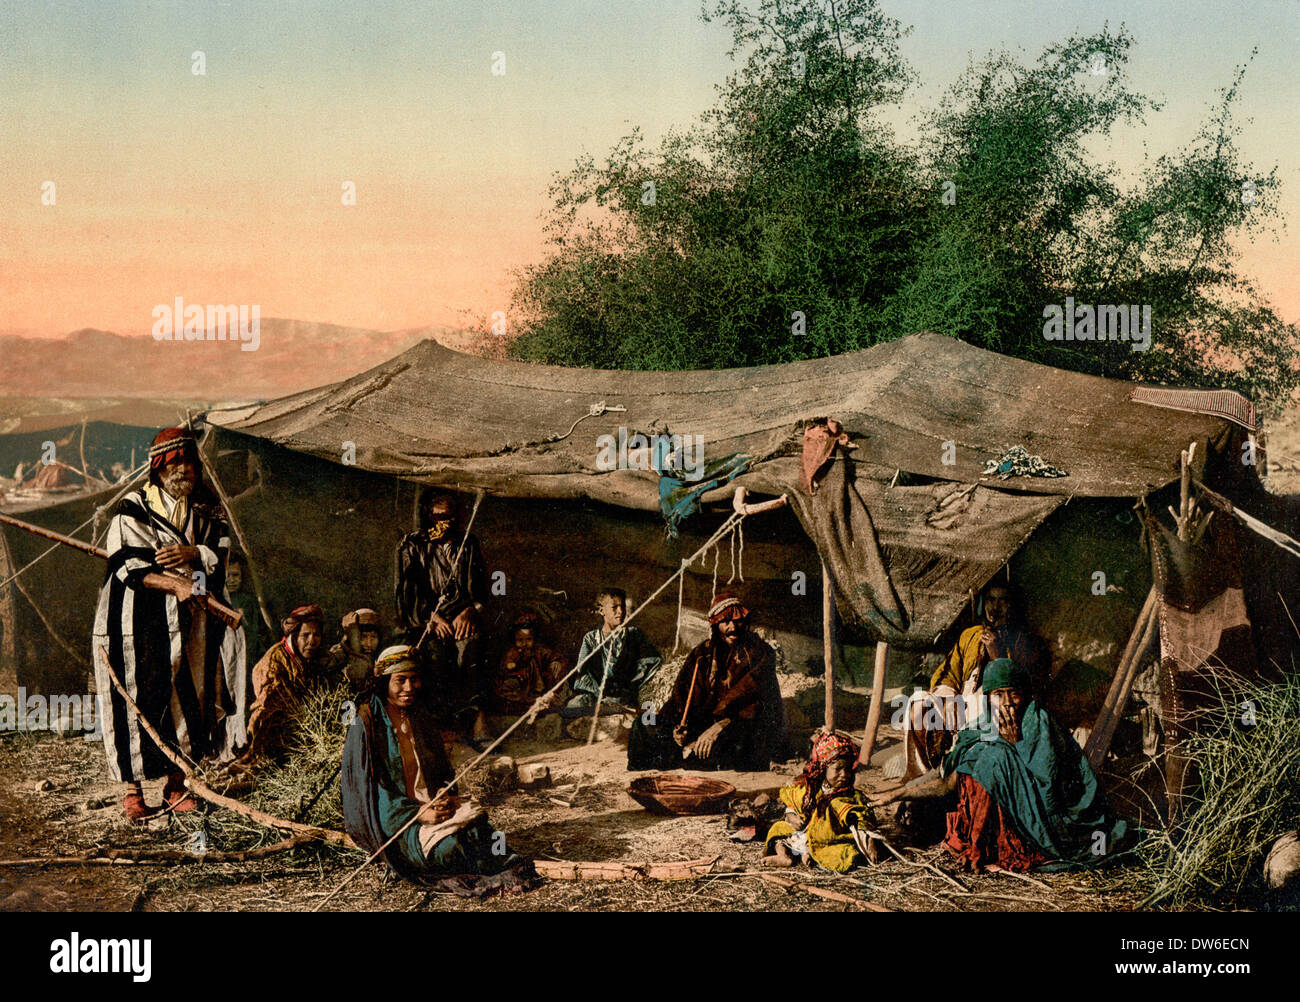 Tenda beduina e occupanti, Terra Santa, circa 1900 Foto Stock